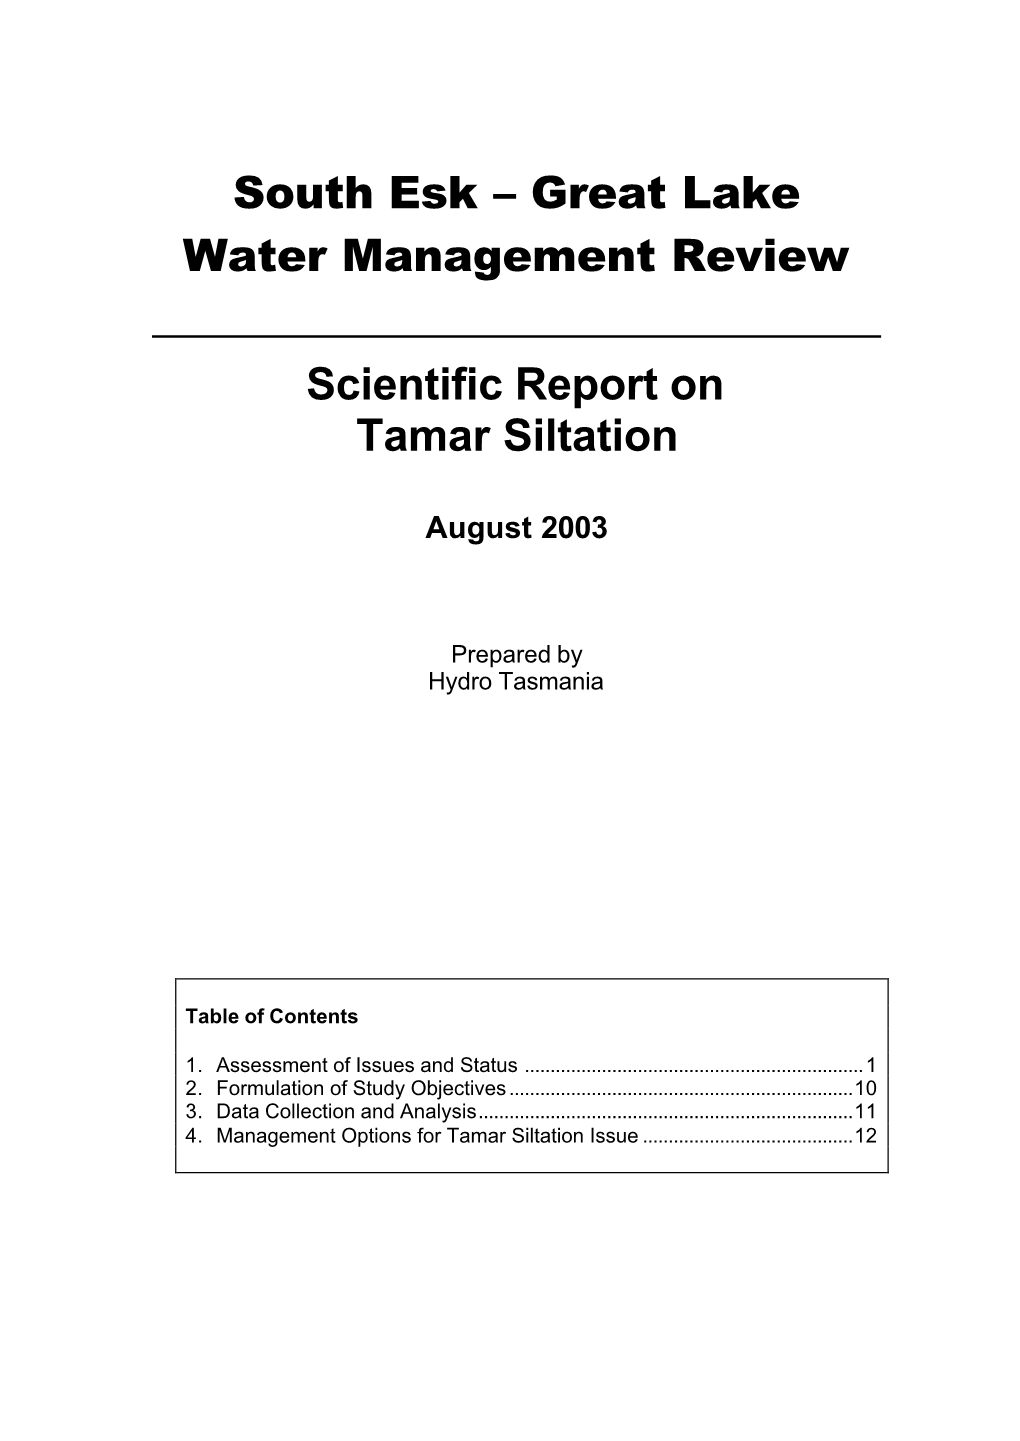 Great Lake Water Management Review Scientific Report on Tamar